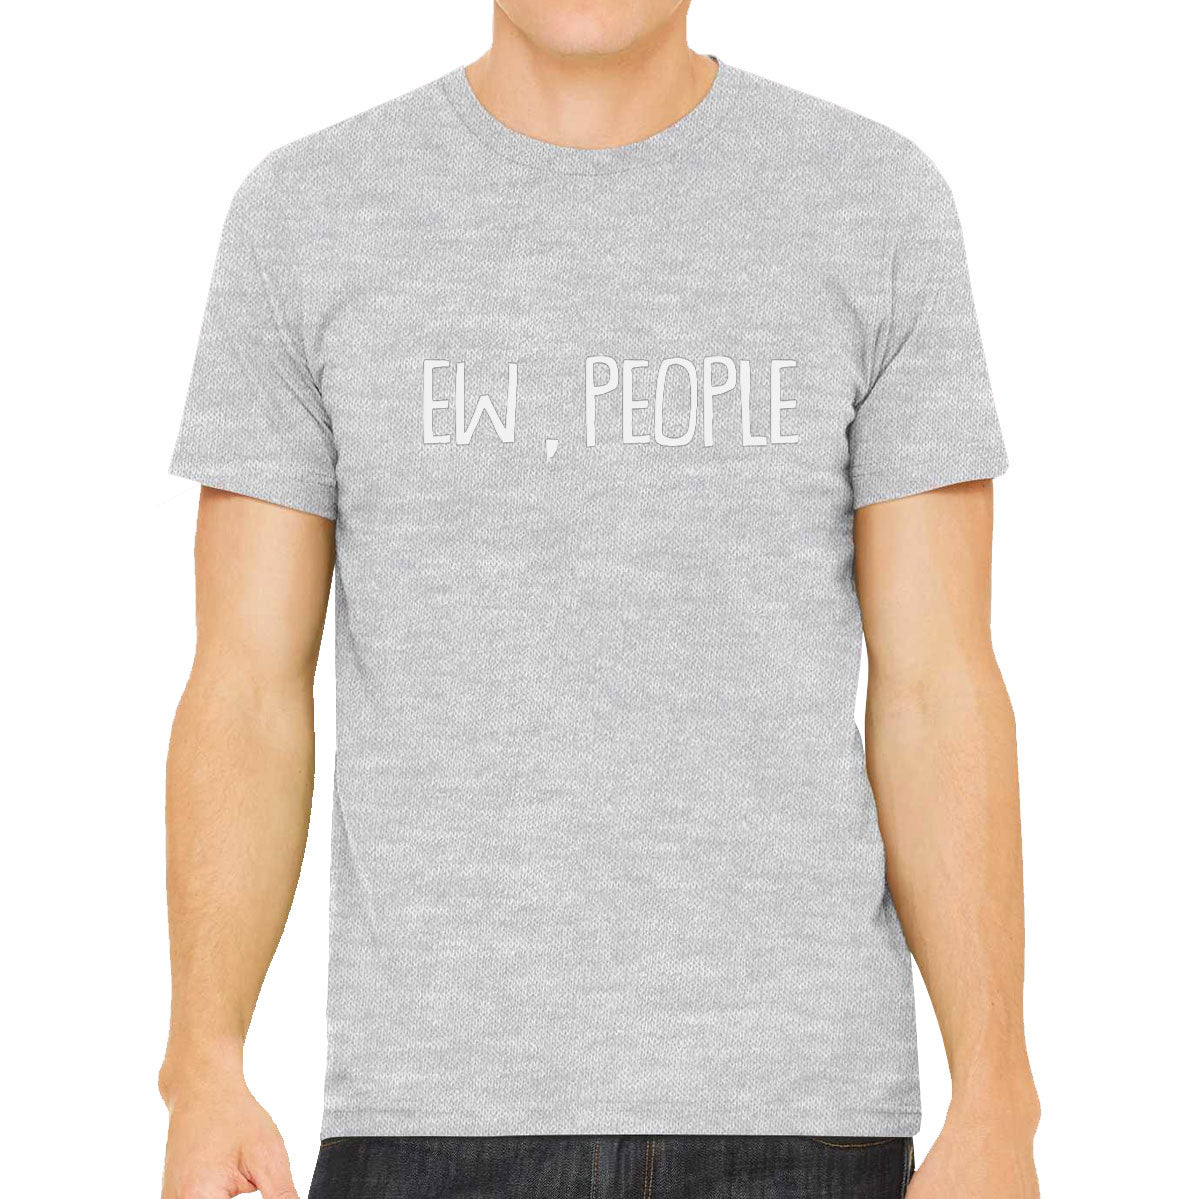 Ew People Men's T-shirt